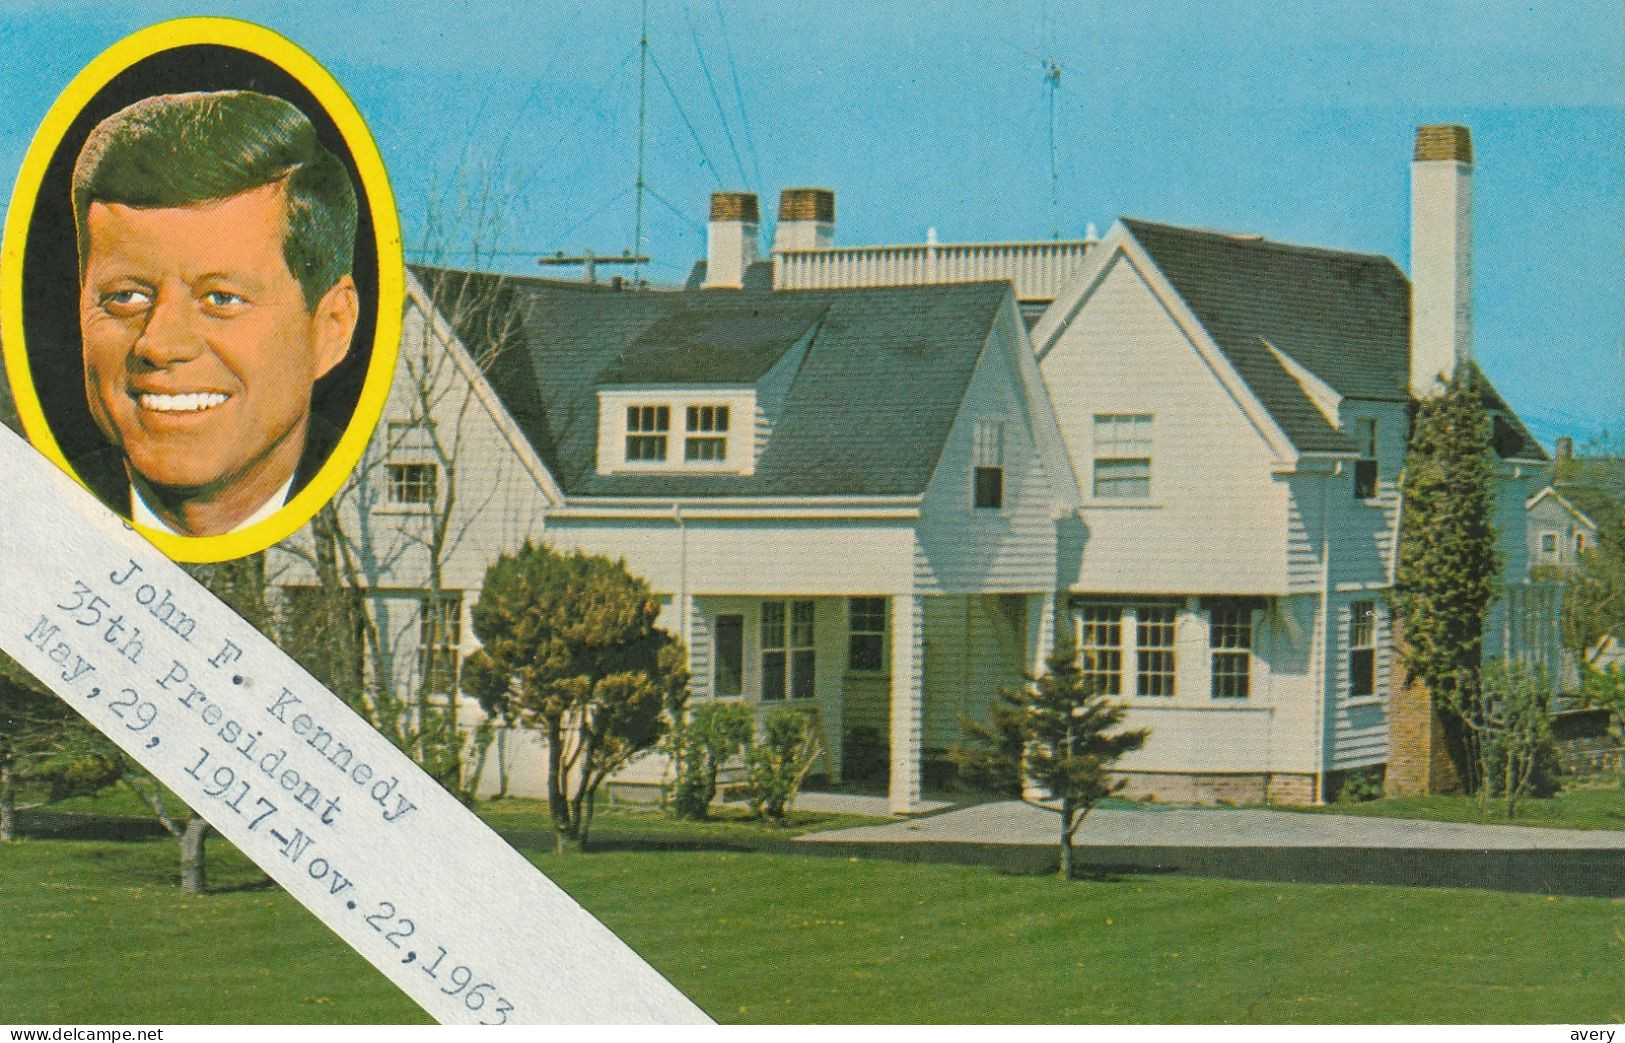 The Summer Home Of The Late John F. Kennedy - 35th President - Hyannis Port, Massachusetts - Presidents